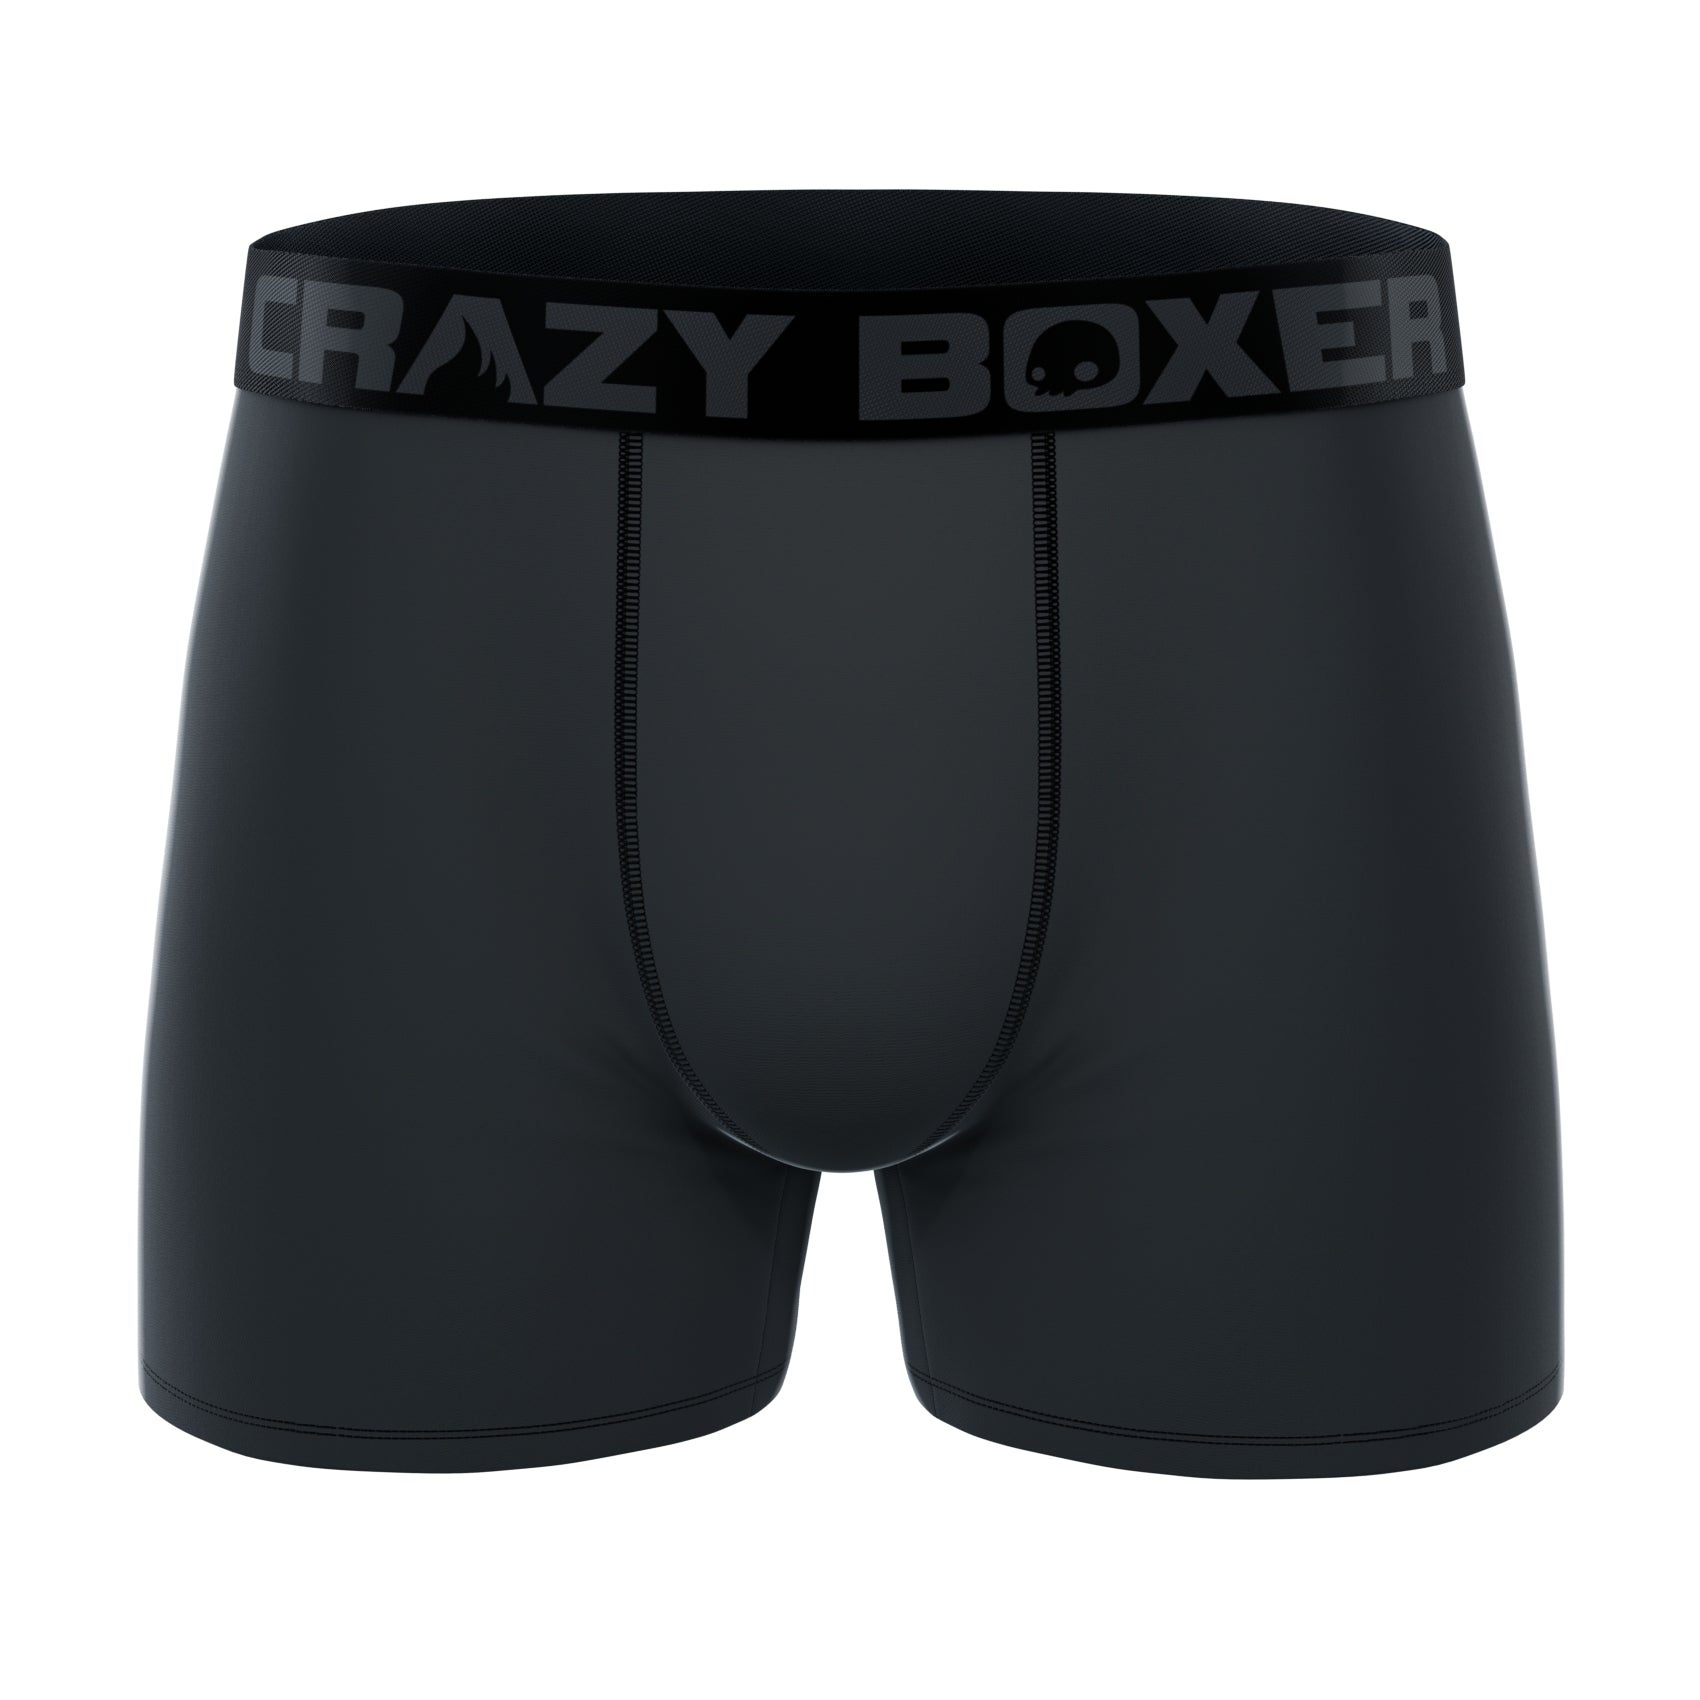 CRAZYBOXER Kellogg's Cereal Boxes Men's Boxer Briefs (3 pack) - ShopperBoard